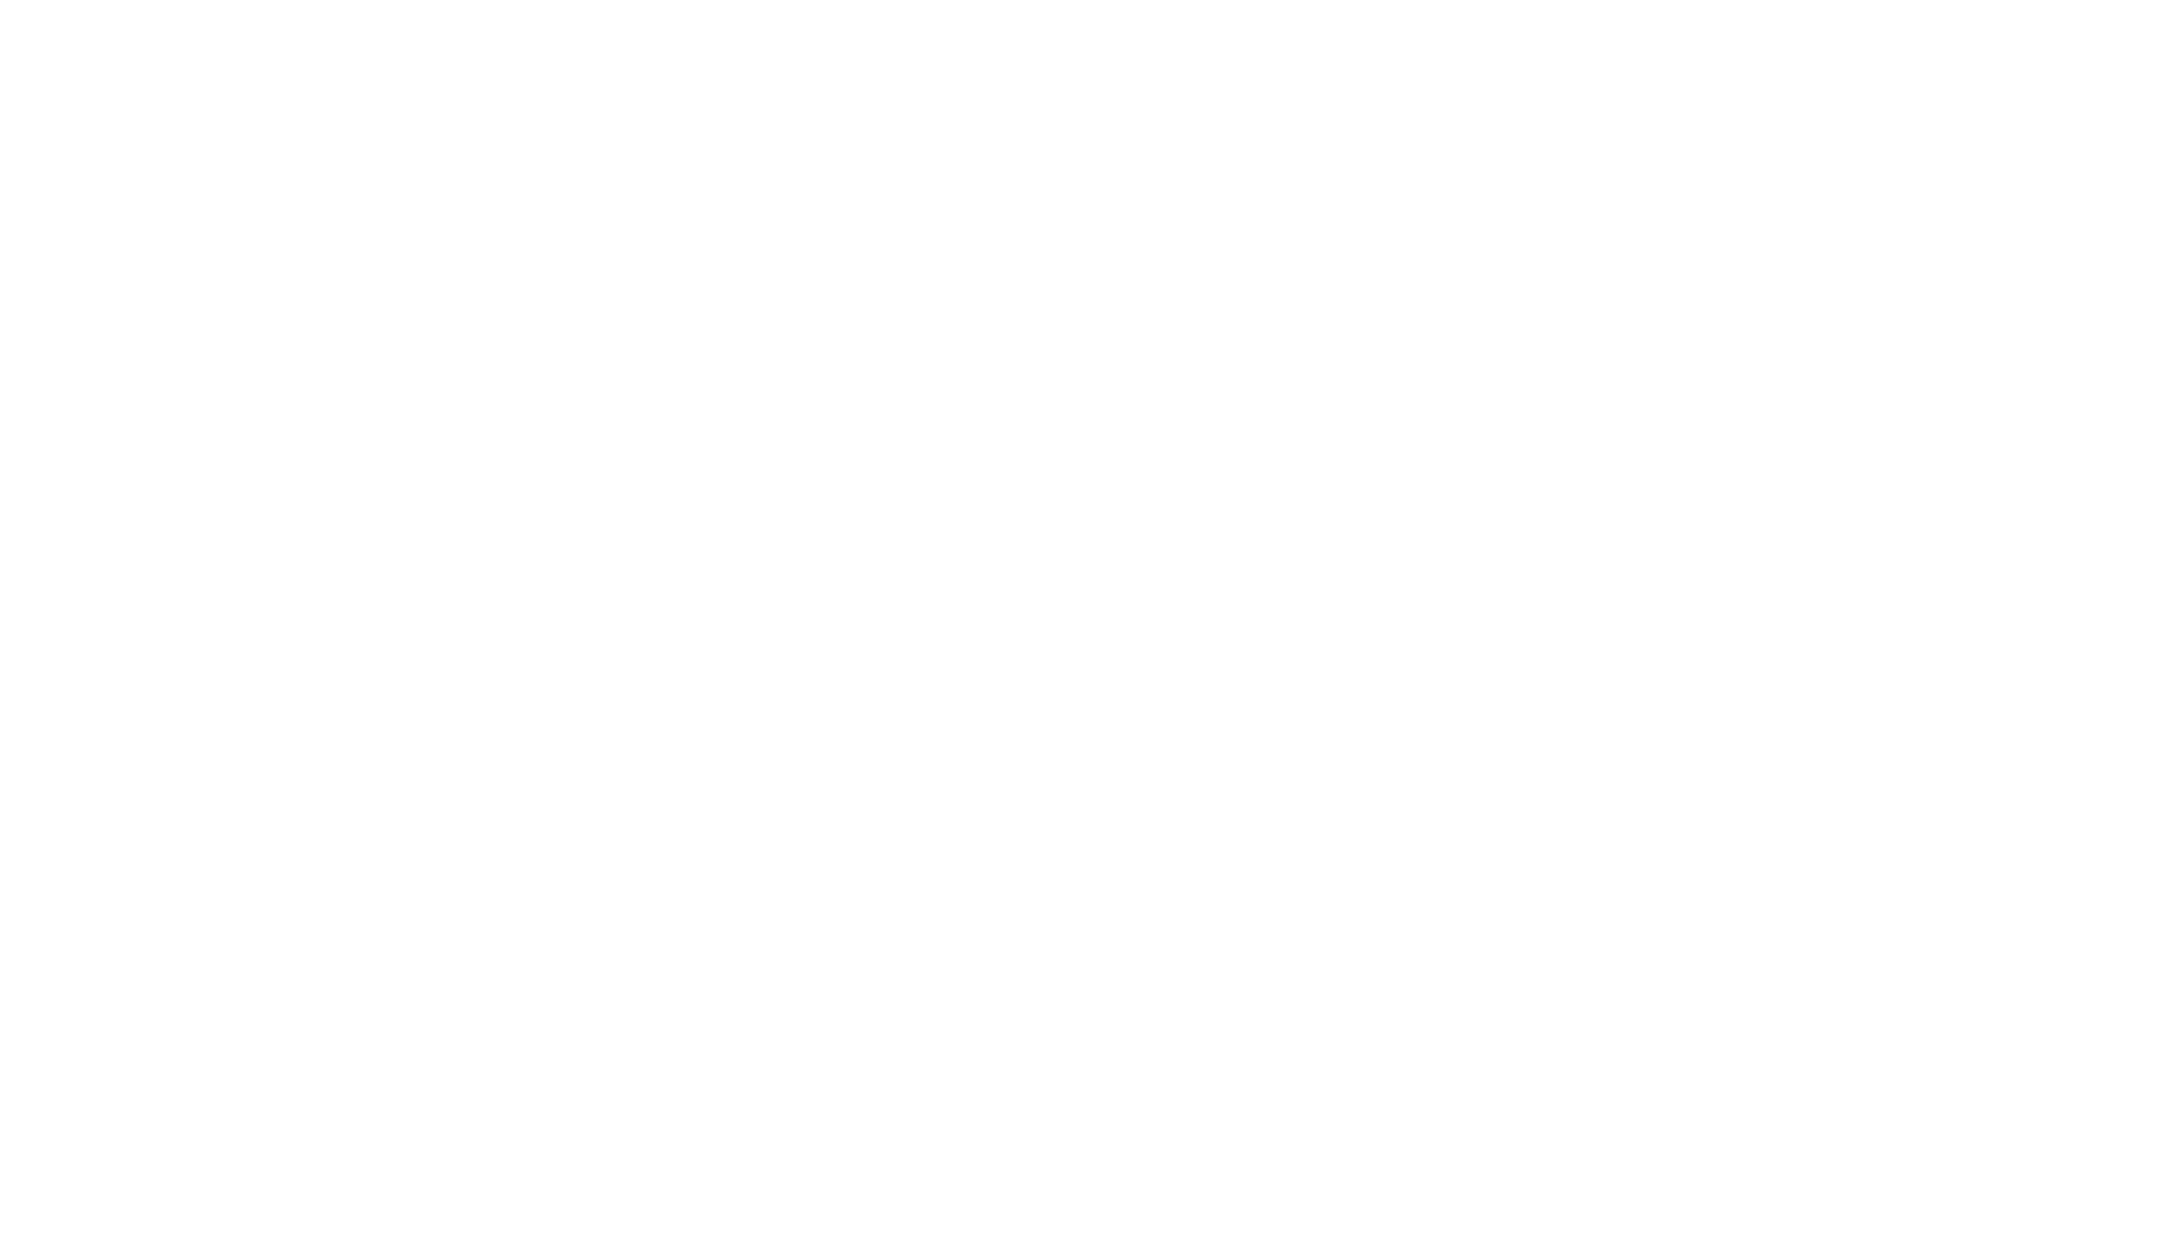 ADF International